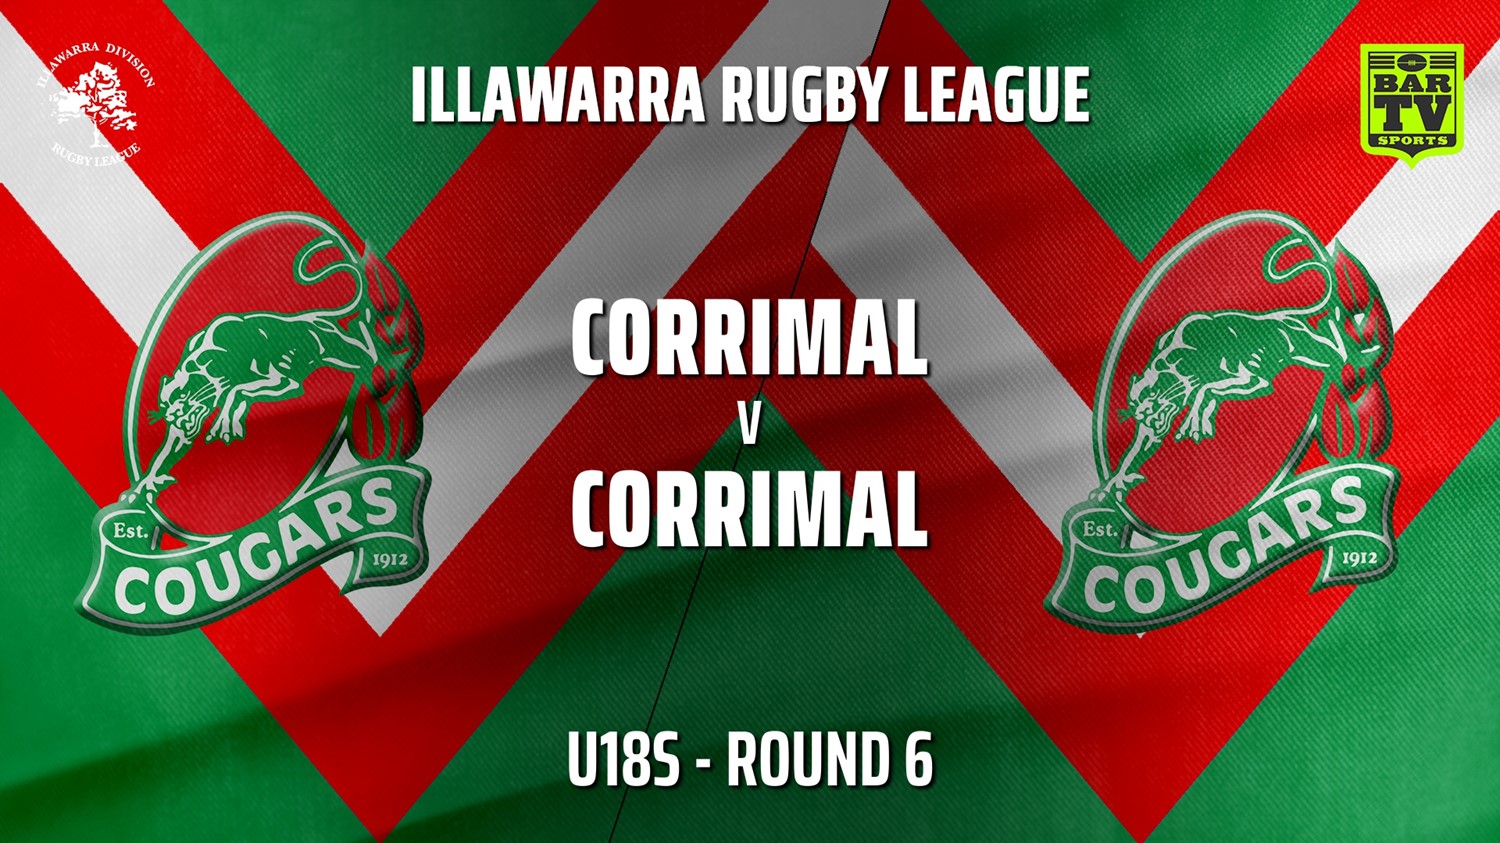 210522-IRL Round 6 - U18s -Corrimal Cougars (Red) v Corrimal Cougars (Green) Slate Image